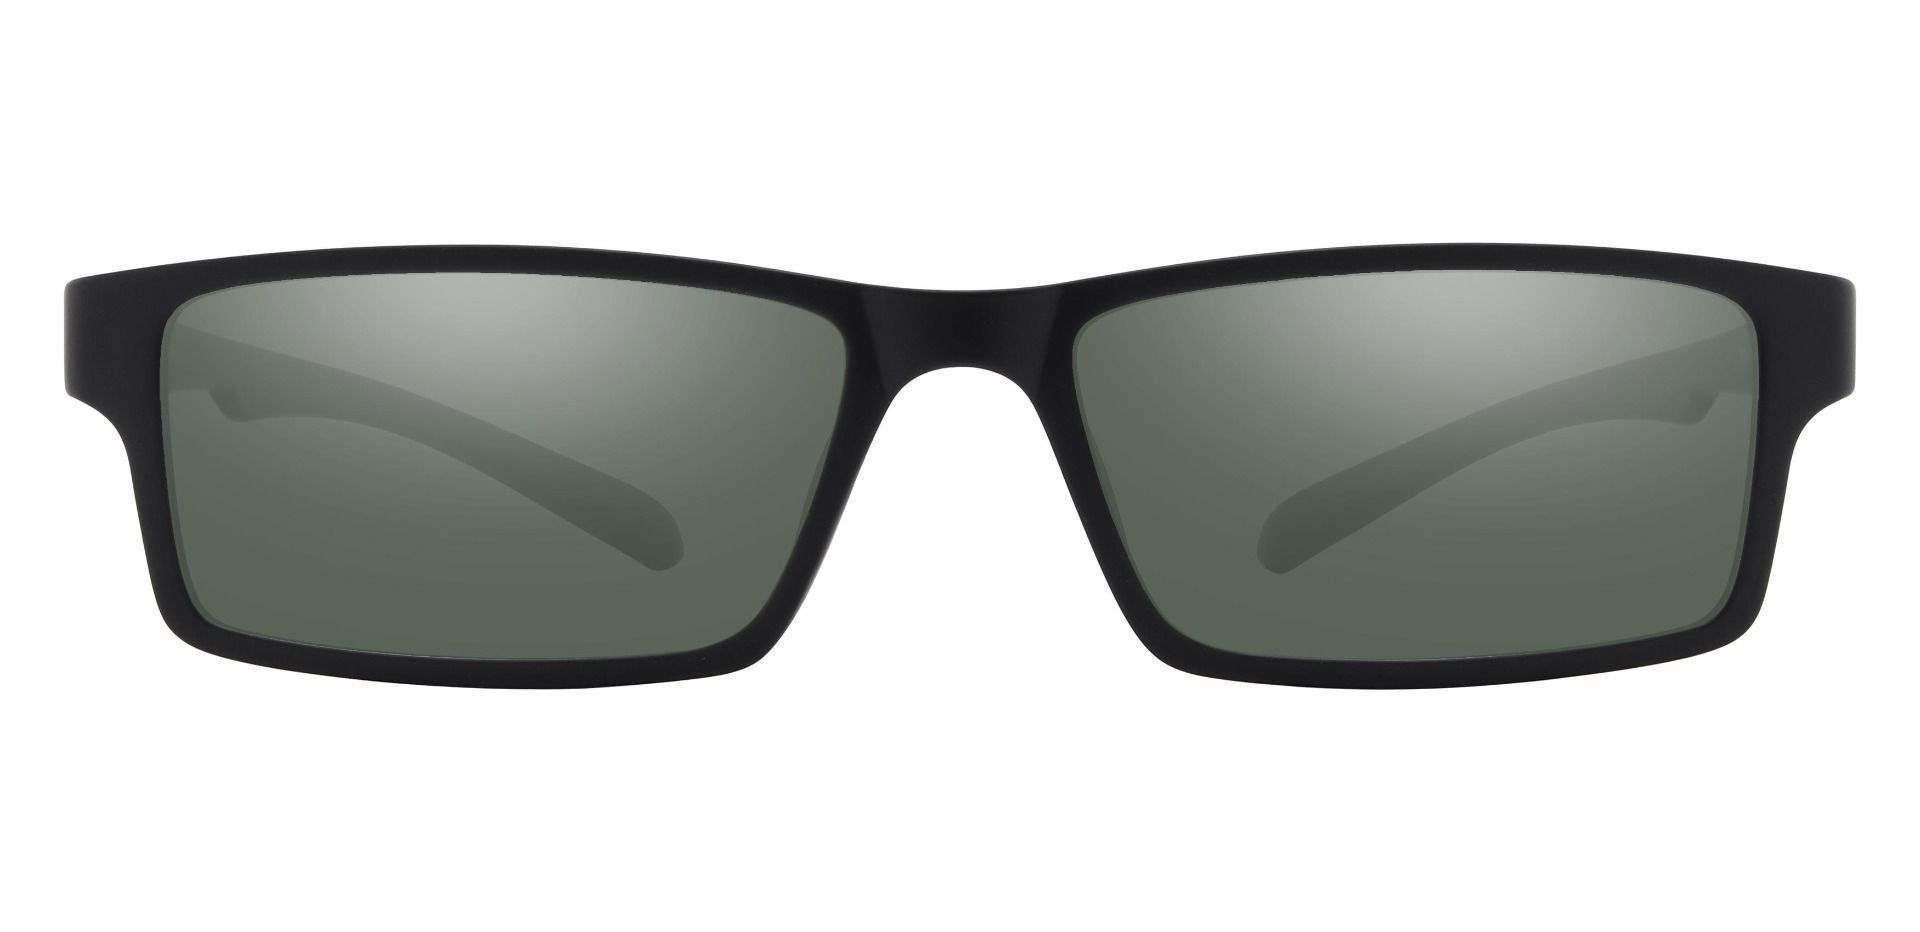 Walsh Rectangle Prescription Sunglasses - Black Frame With Green Lenses